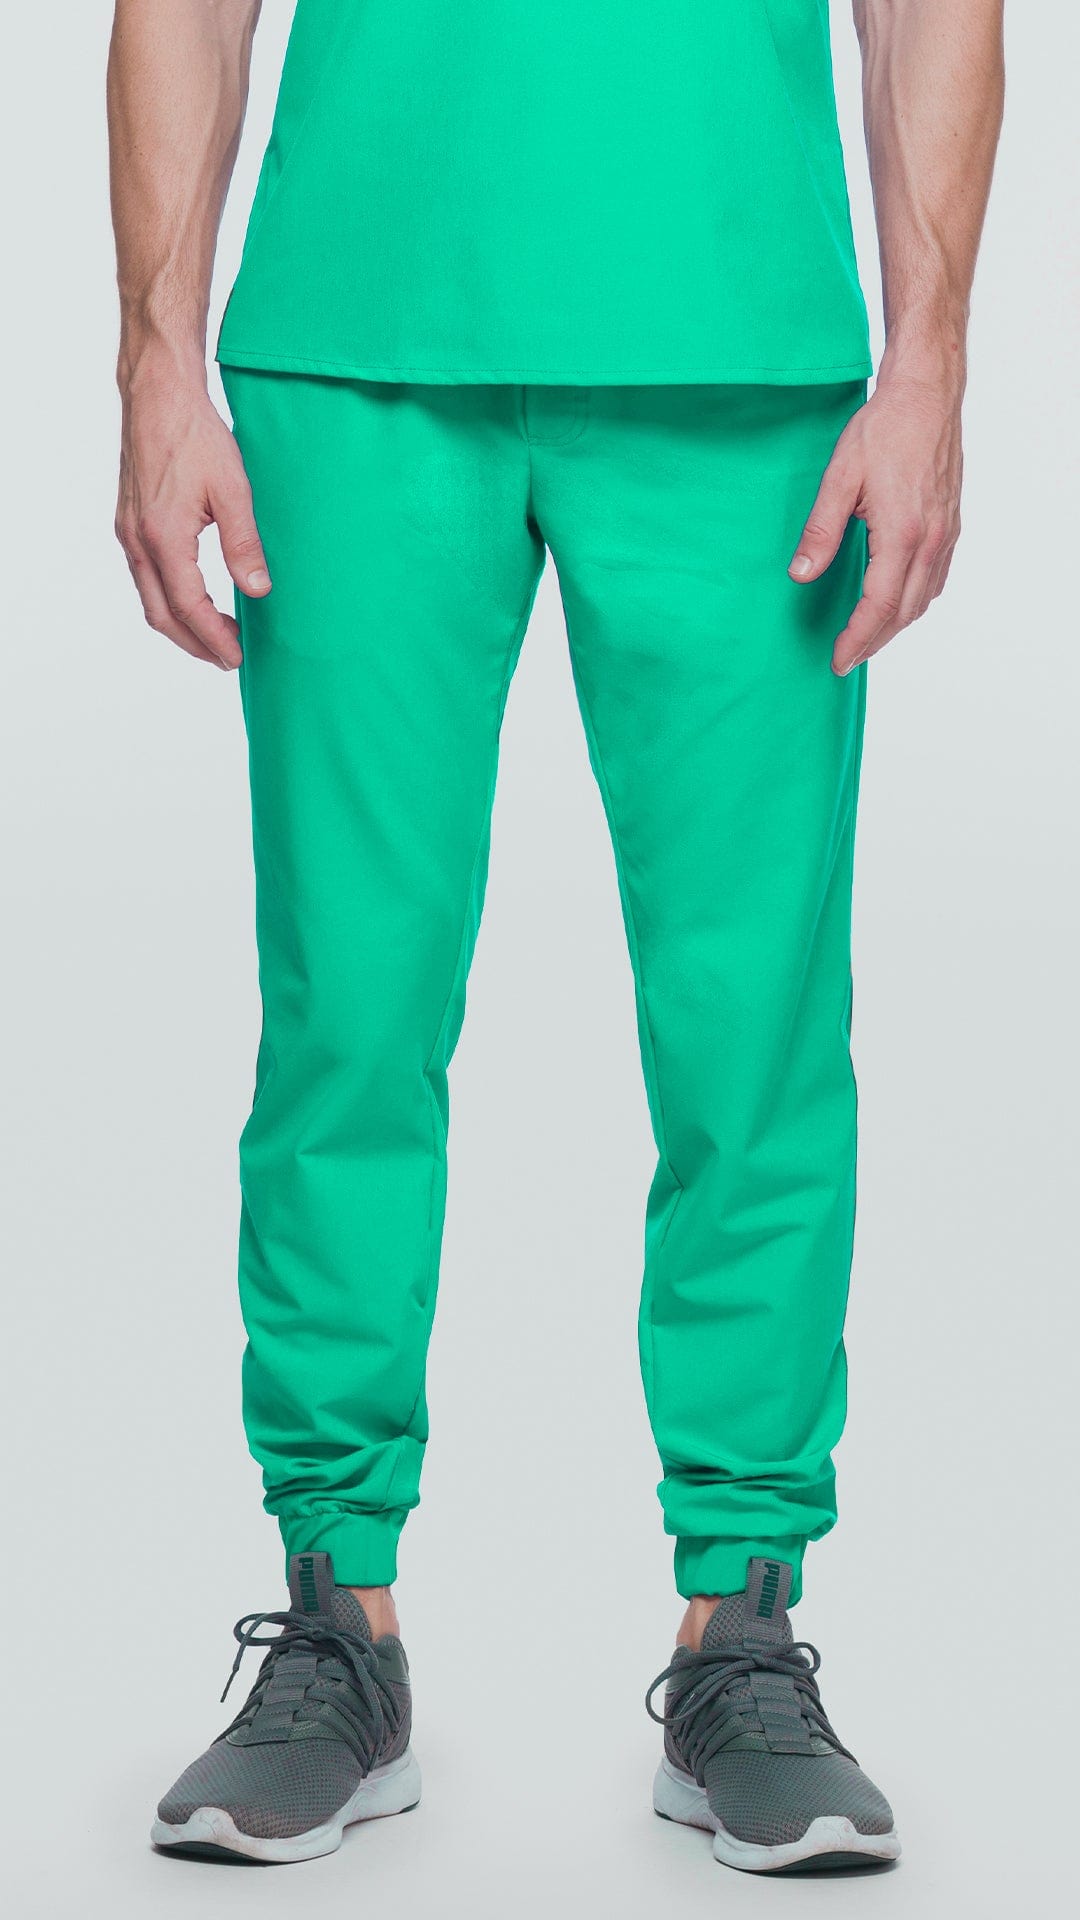 Kanaus® Pants Vanguard Minty Green | Caballero - Kanaus